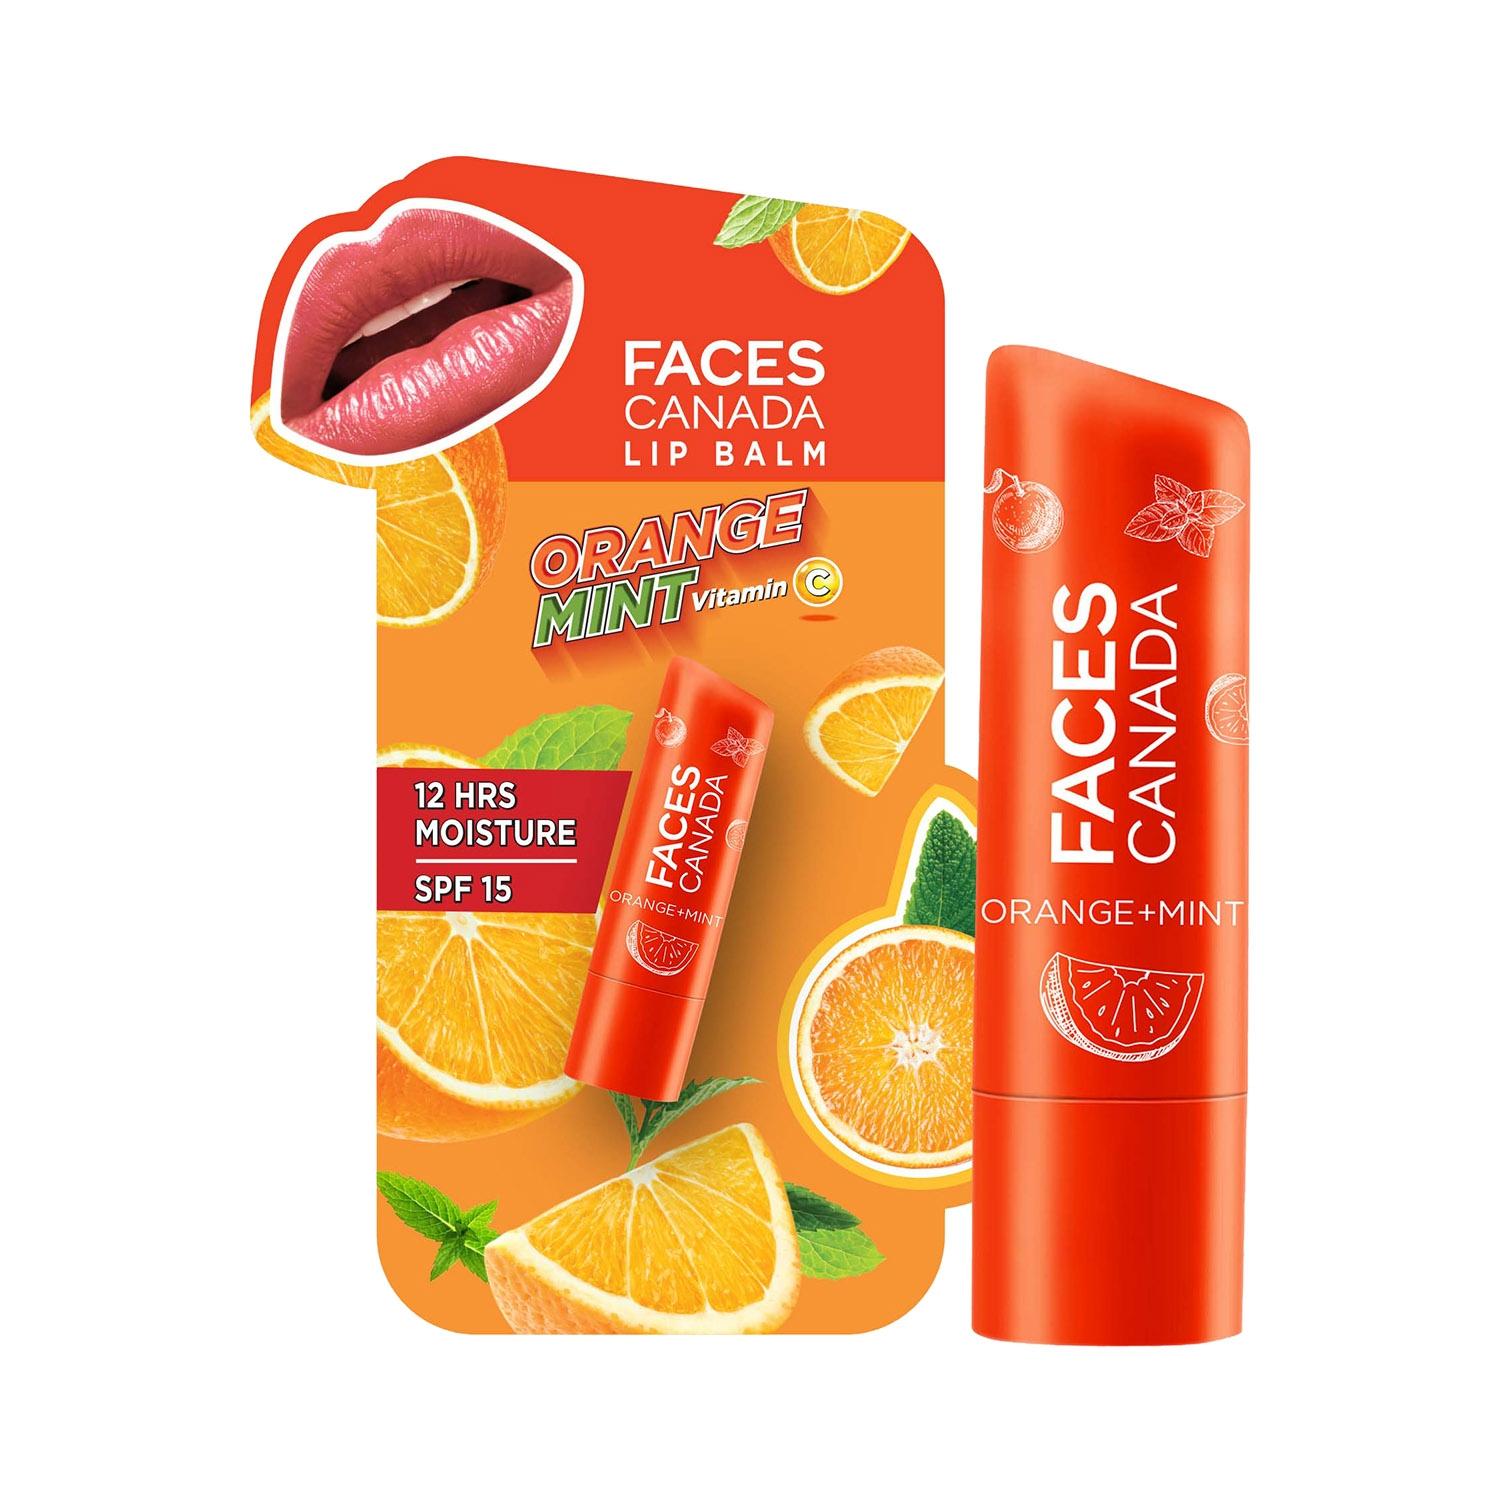 faces canada lip balm - 01 orange mint (4.8g)